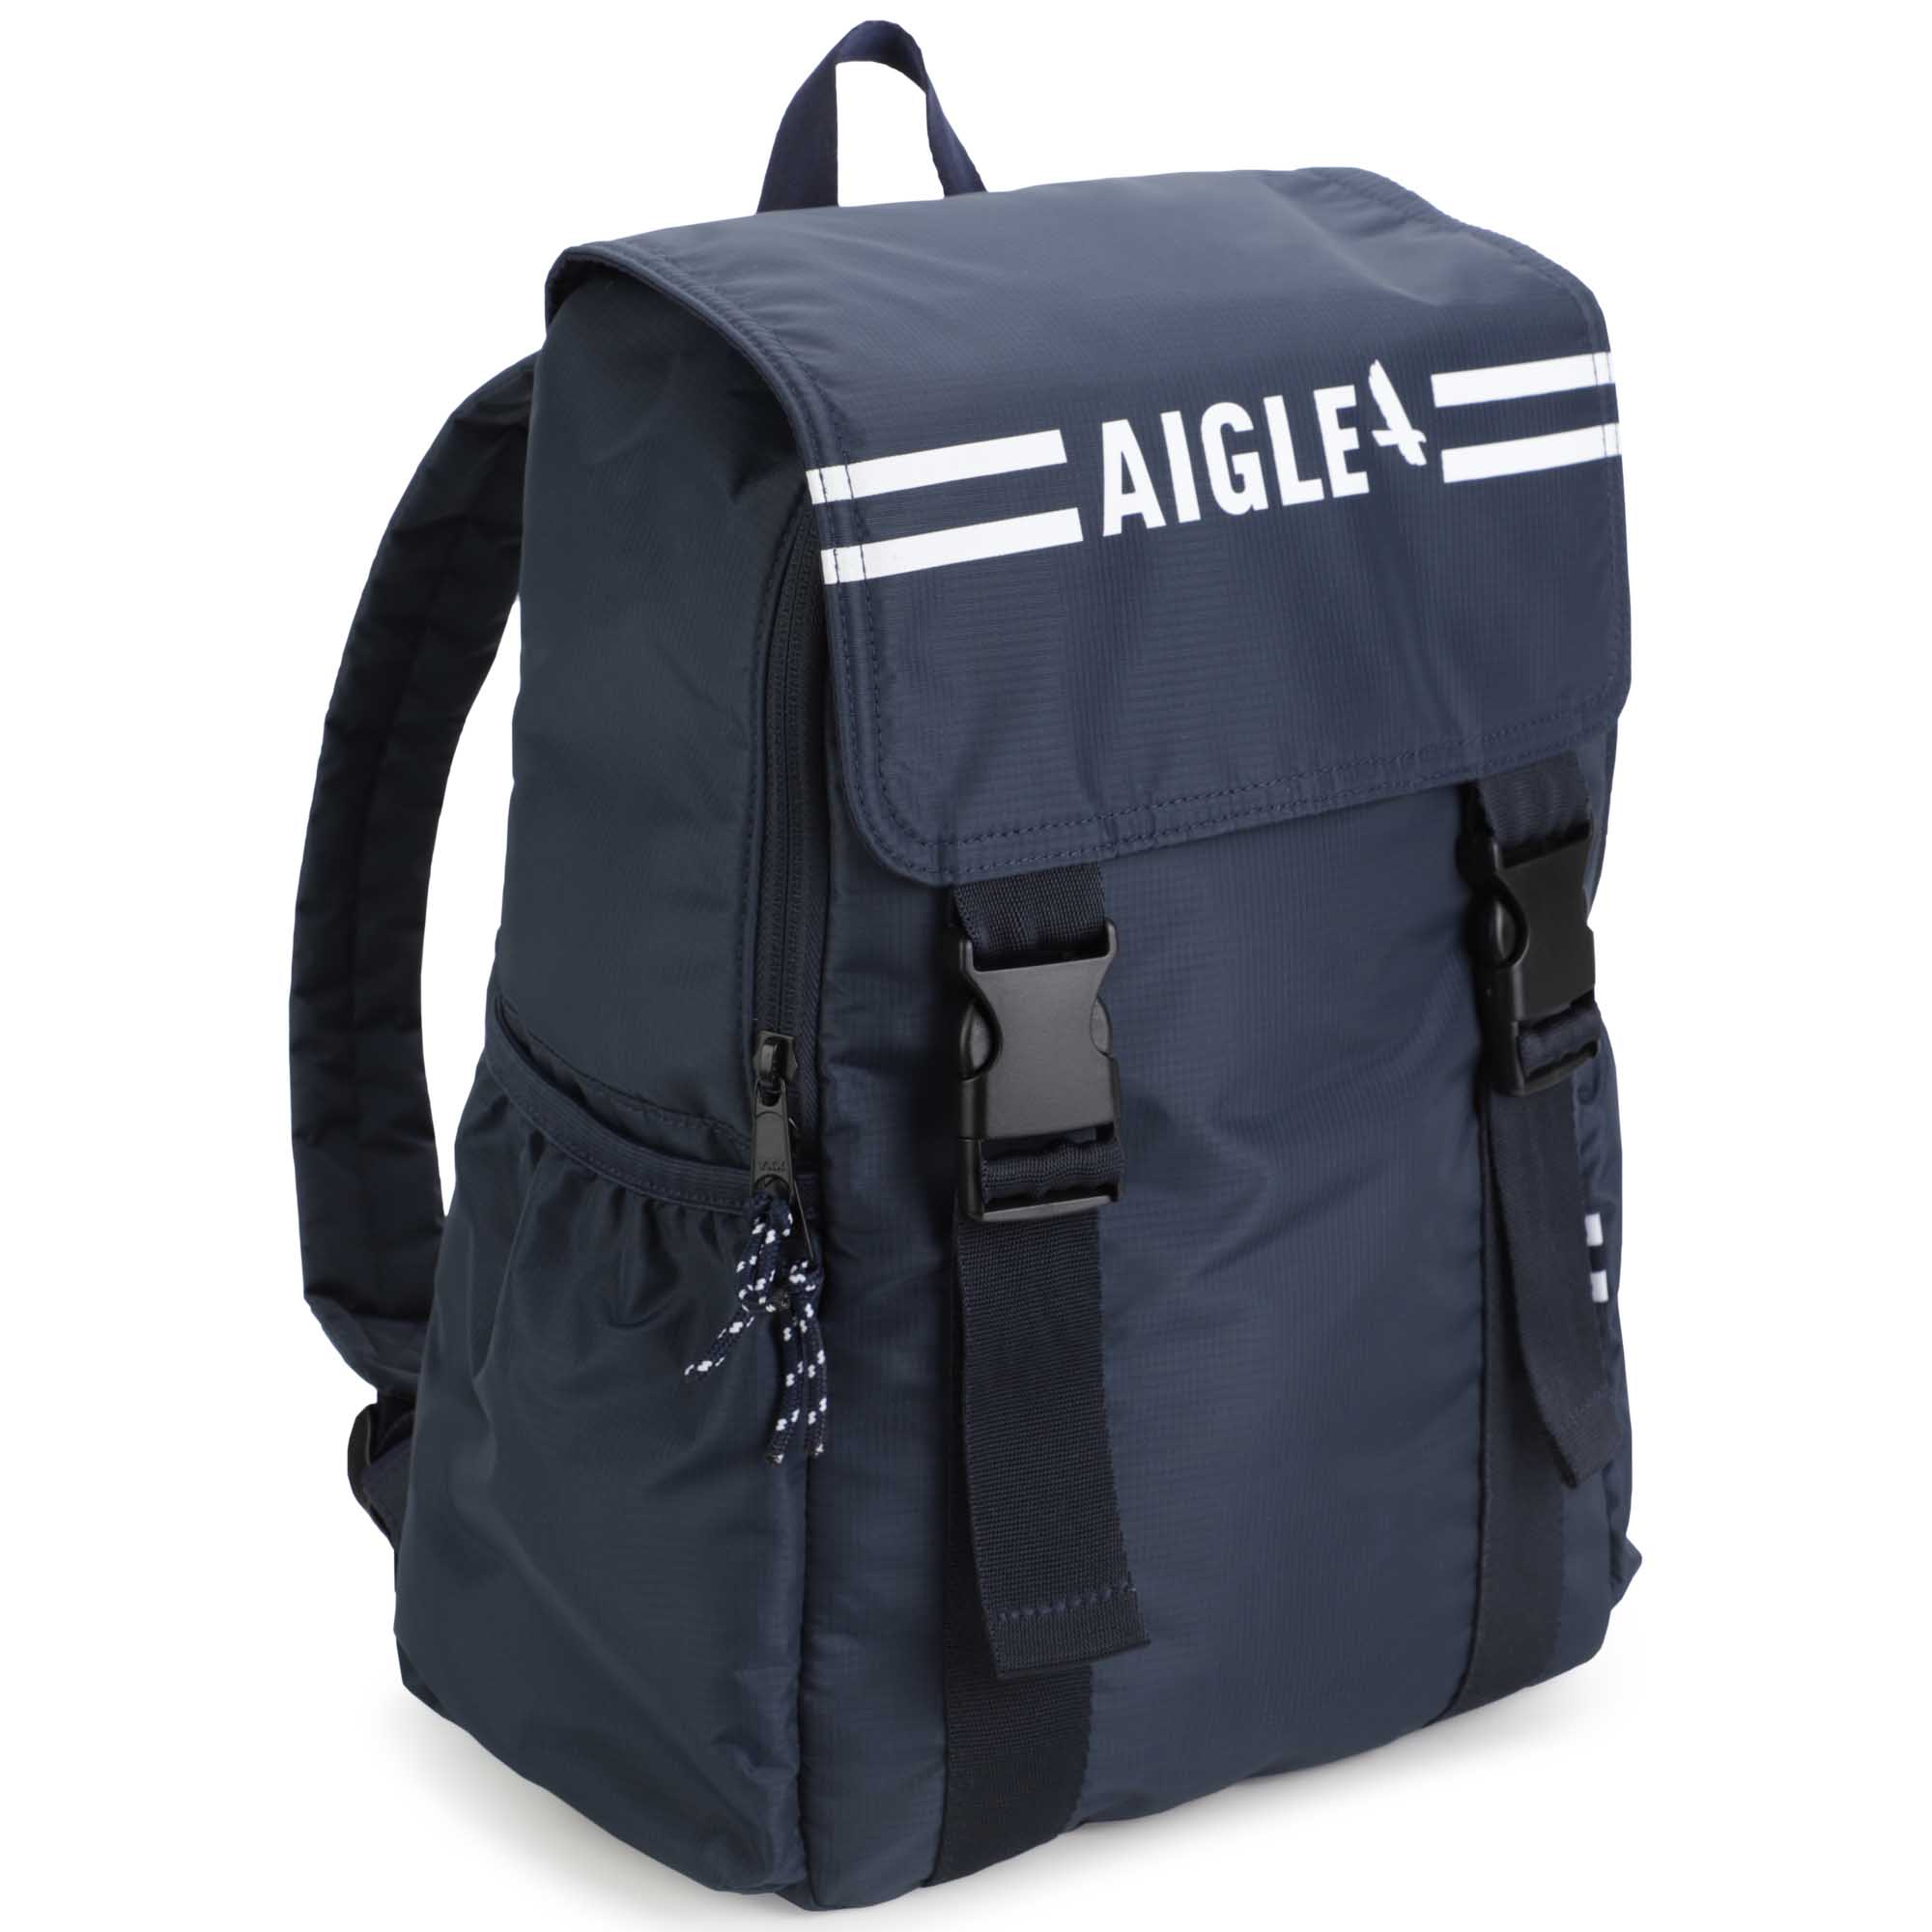 Adjustable-Strap Backpack AIGLE for UNISEX